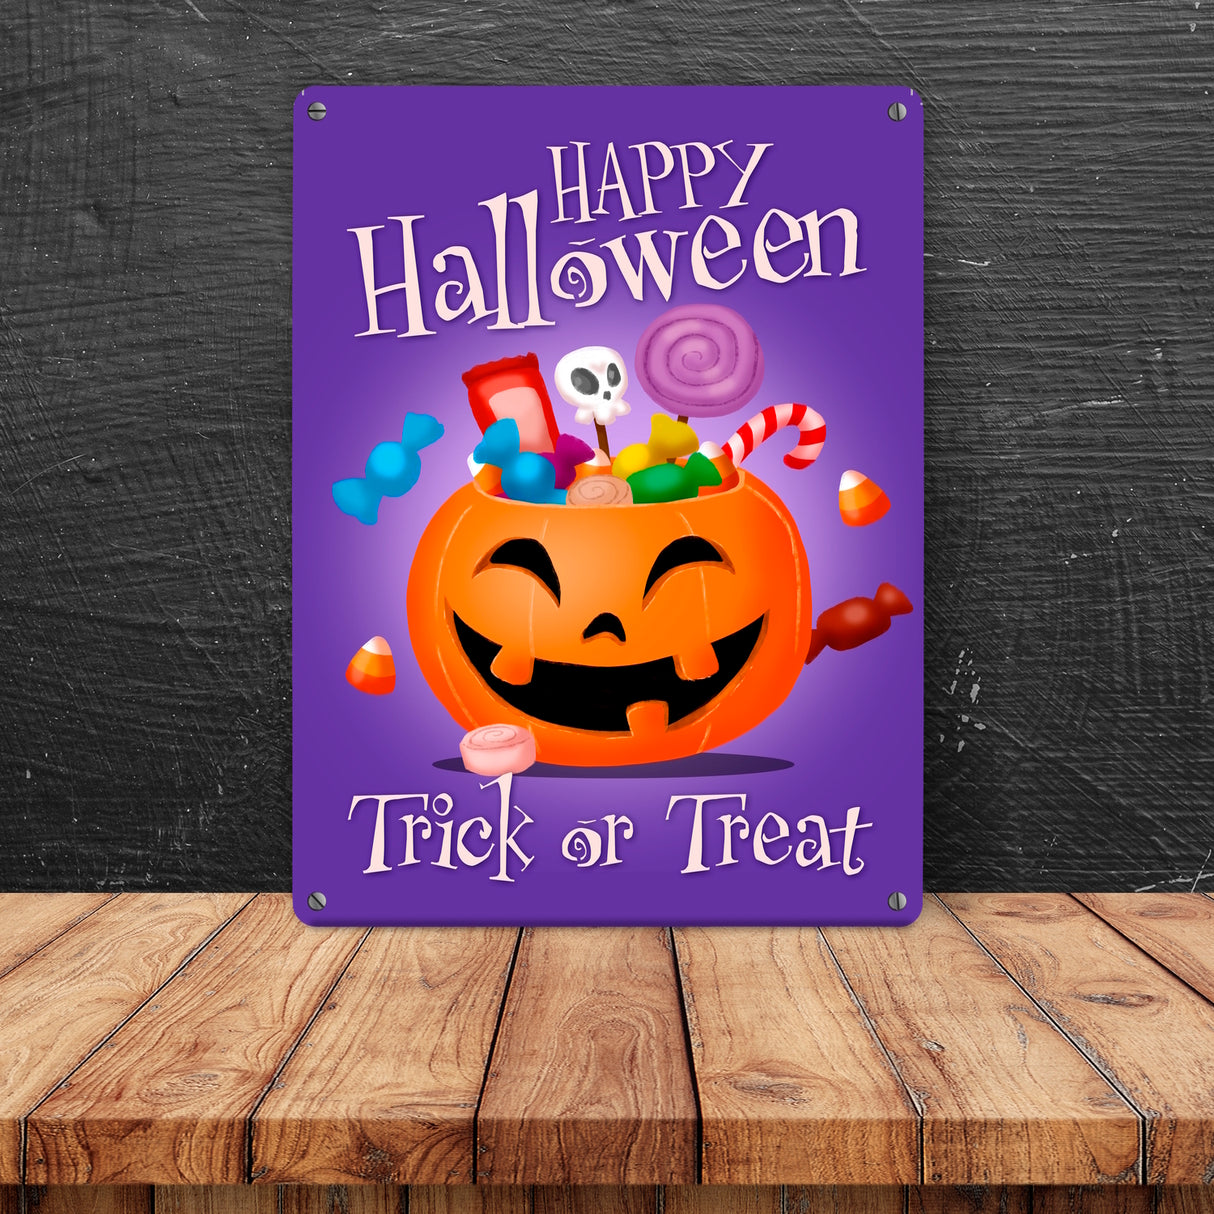 Happy Halloween Trick or Treat Metallschild in lila mit süßem Kürbis